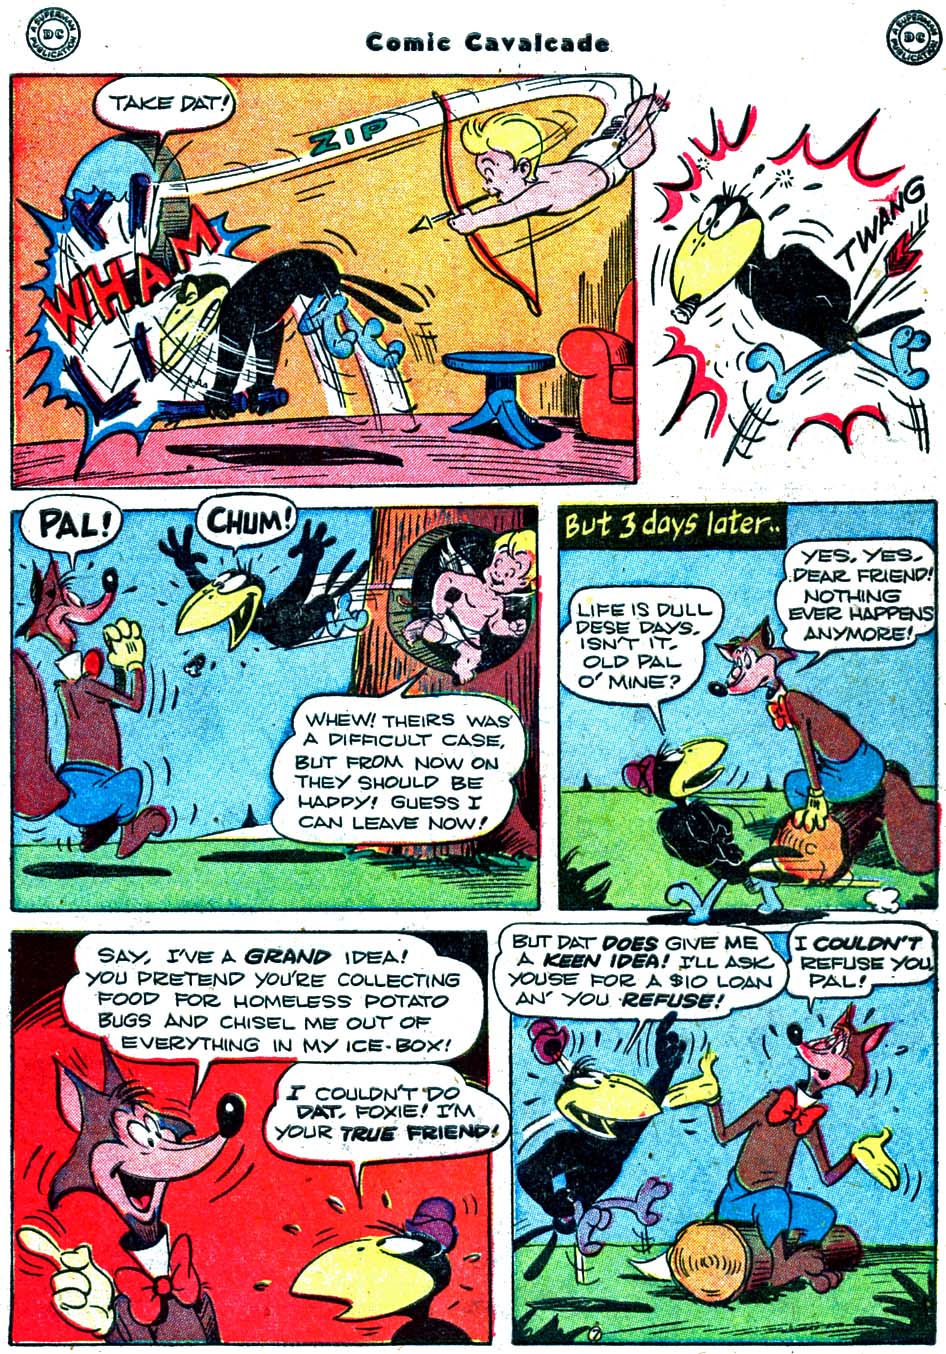 Comic Cavalcade issue 32 - Page 9